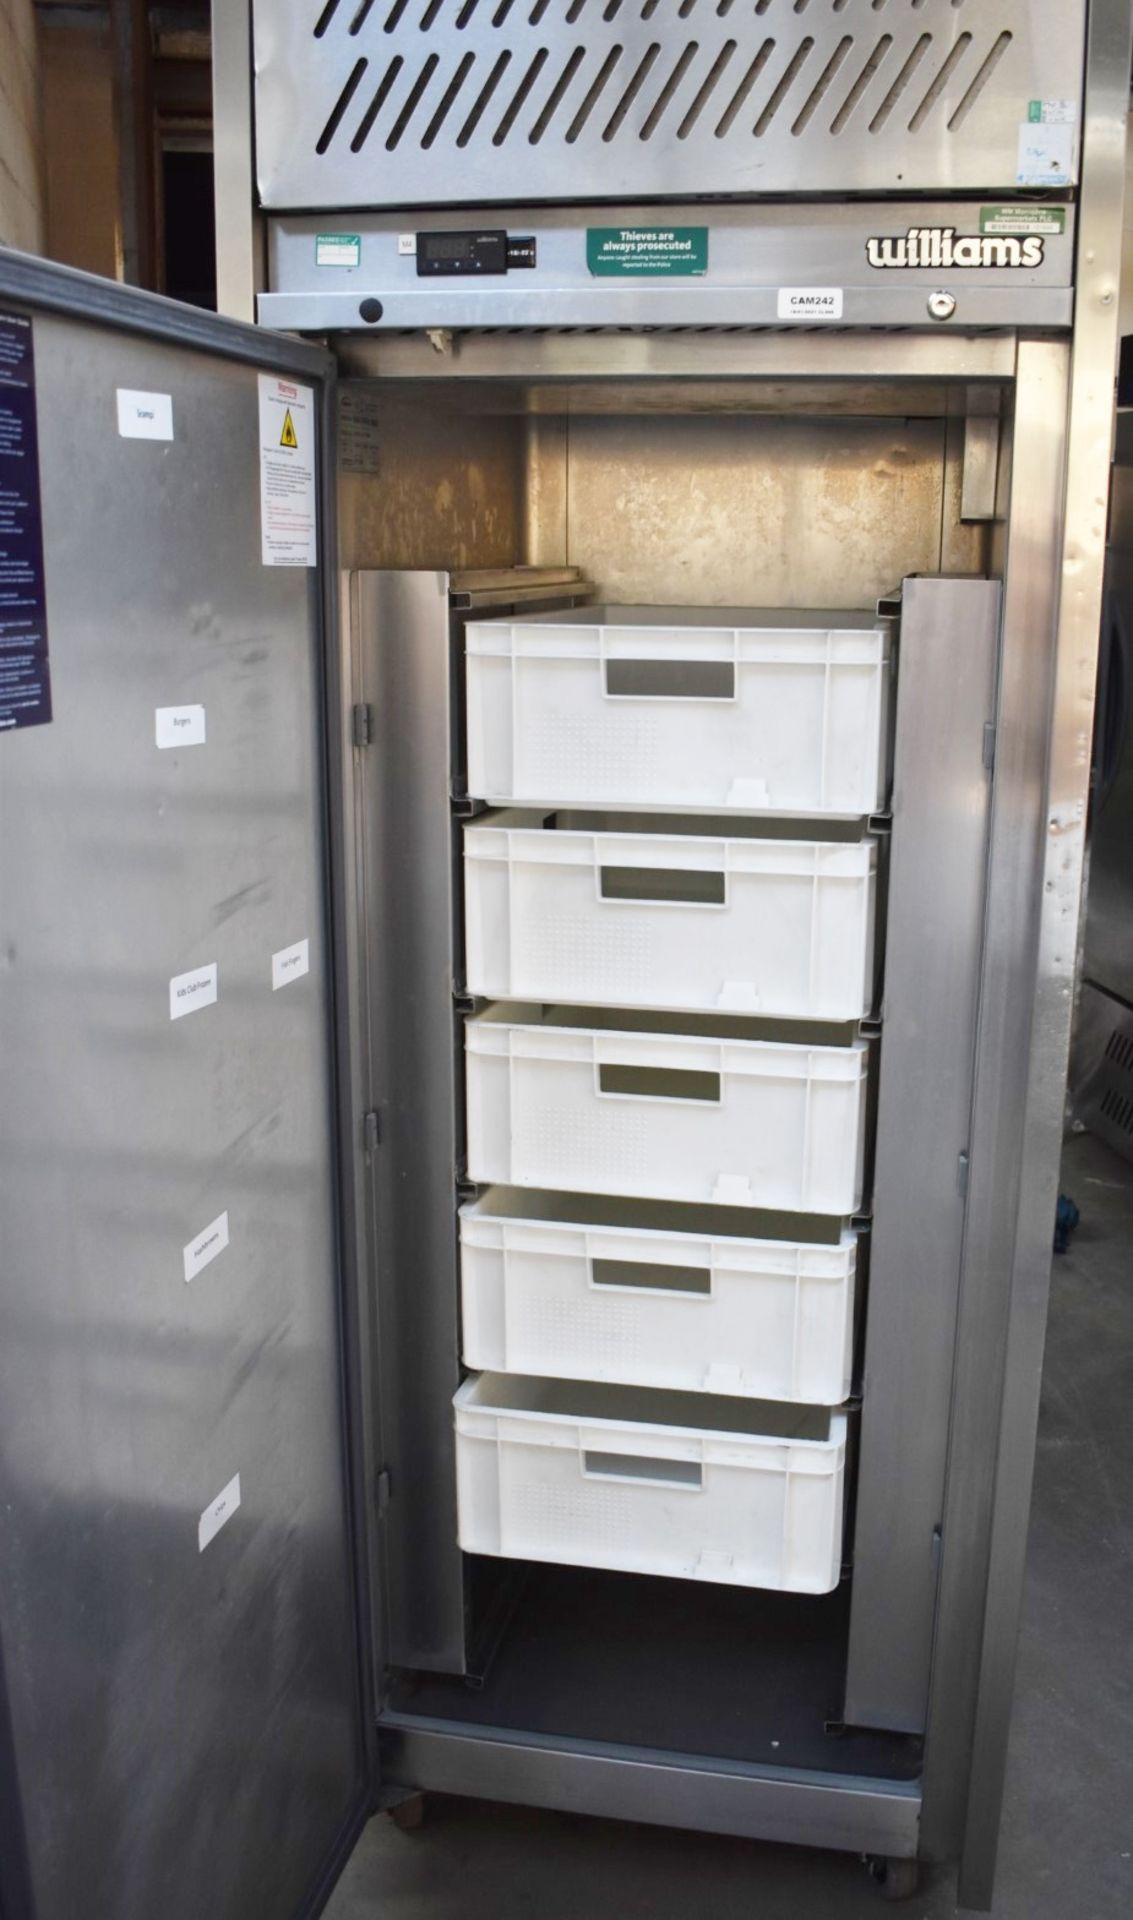 1 x Williams Jade Upright Single Door Refrigerator Stainless Steel Exterior & Internal Bakery Trays - Image 8 of 8